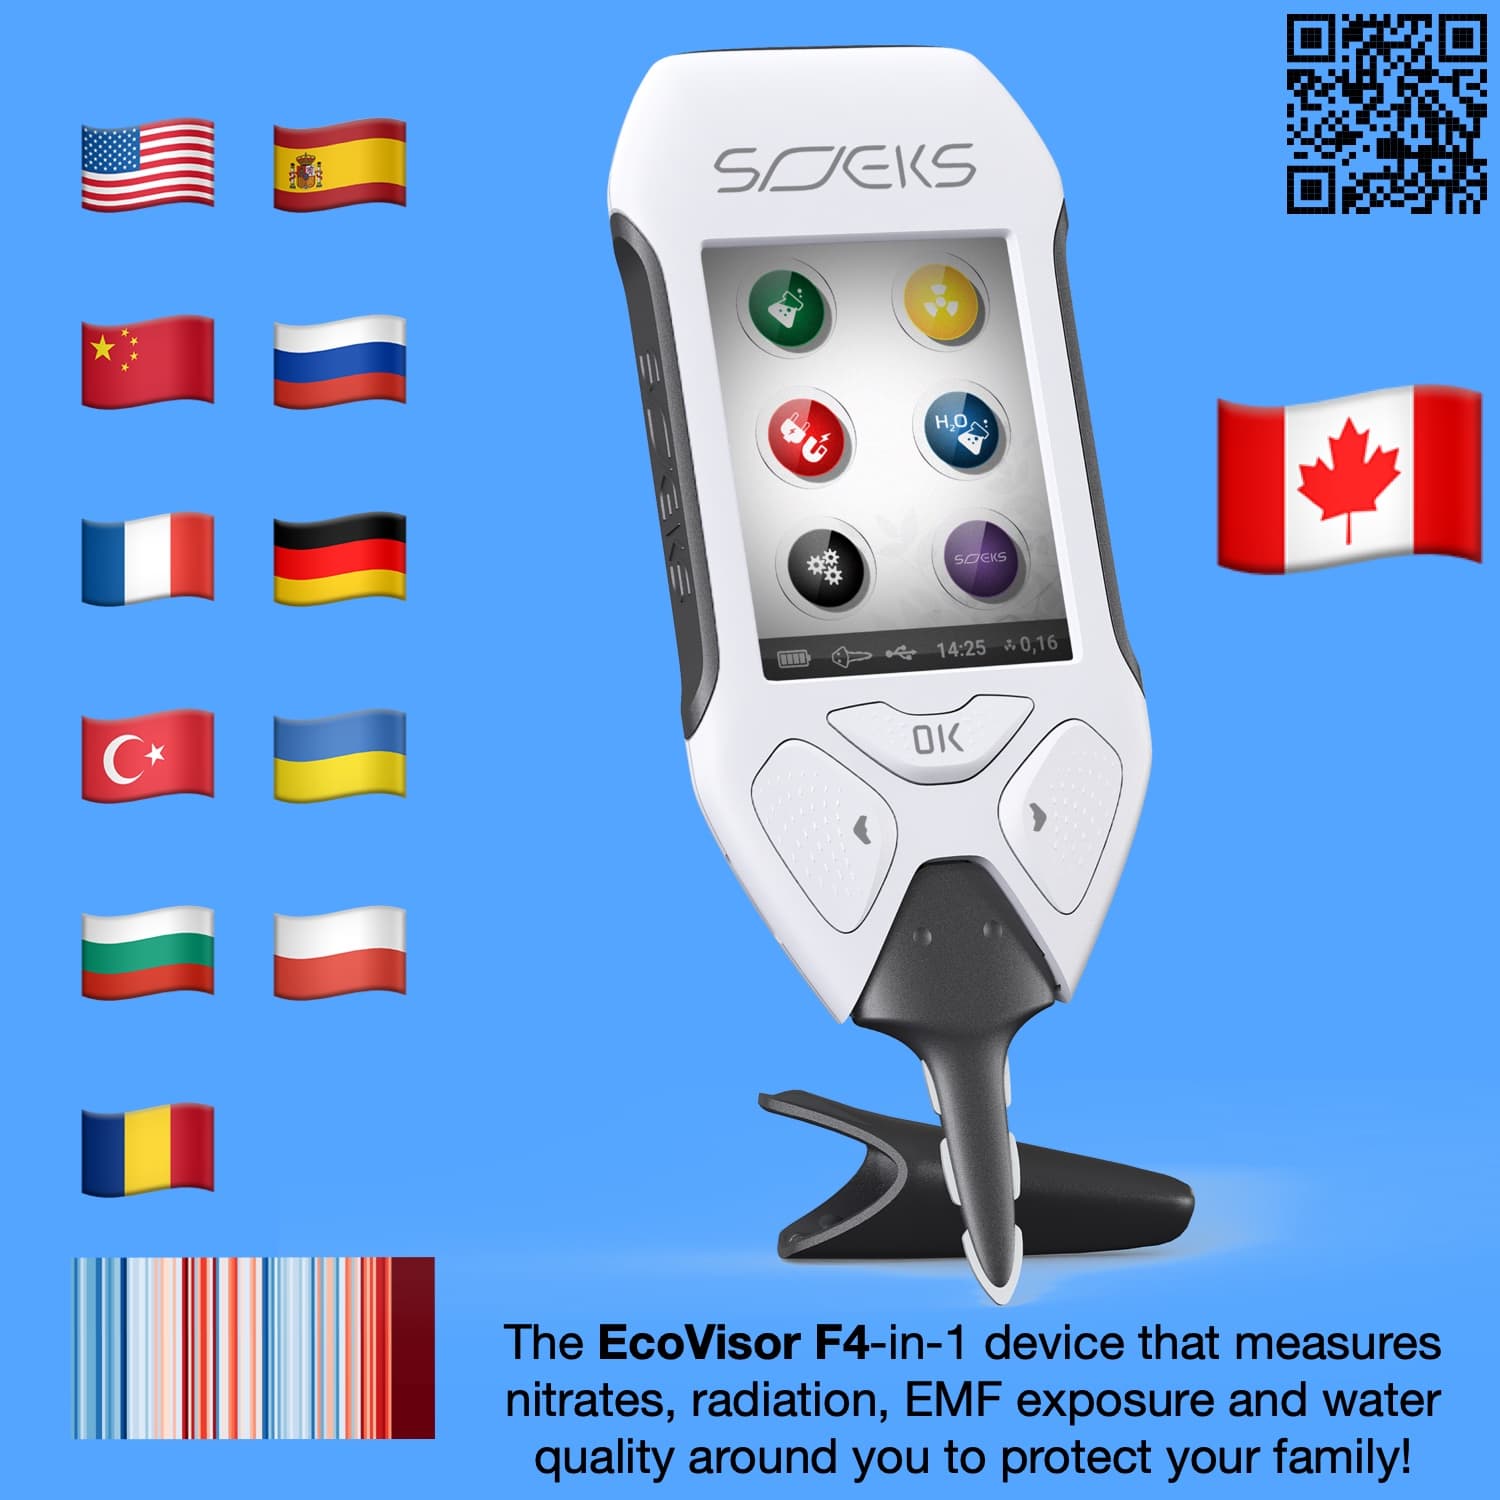 EcoVisor F4 has Interface in 11 languages, Flags: English, Spanish, Chinese, Russian, French, German, Turkish, Ukrainian, Bulgarian, Poland, Romanian